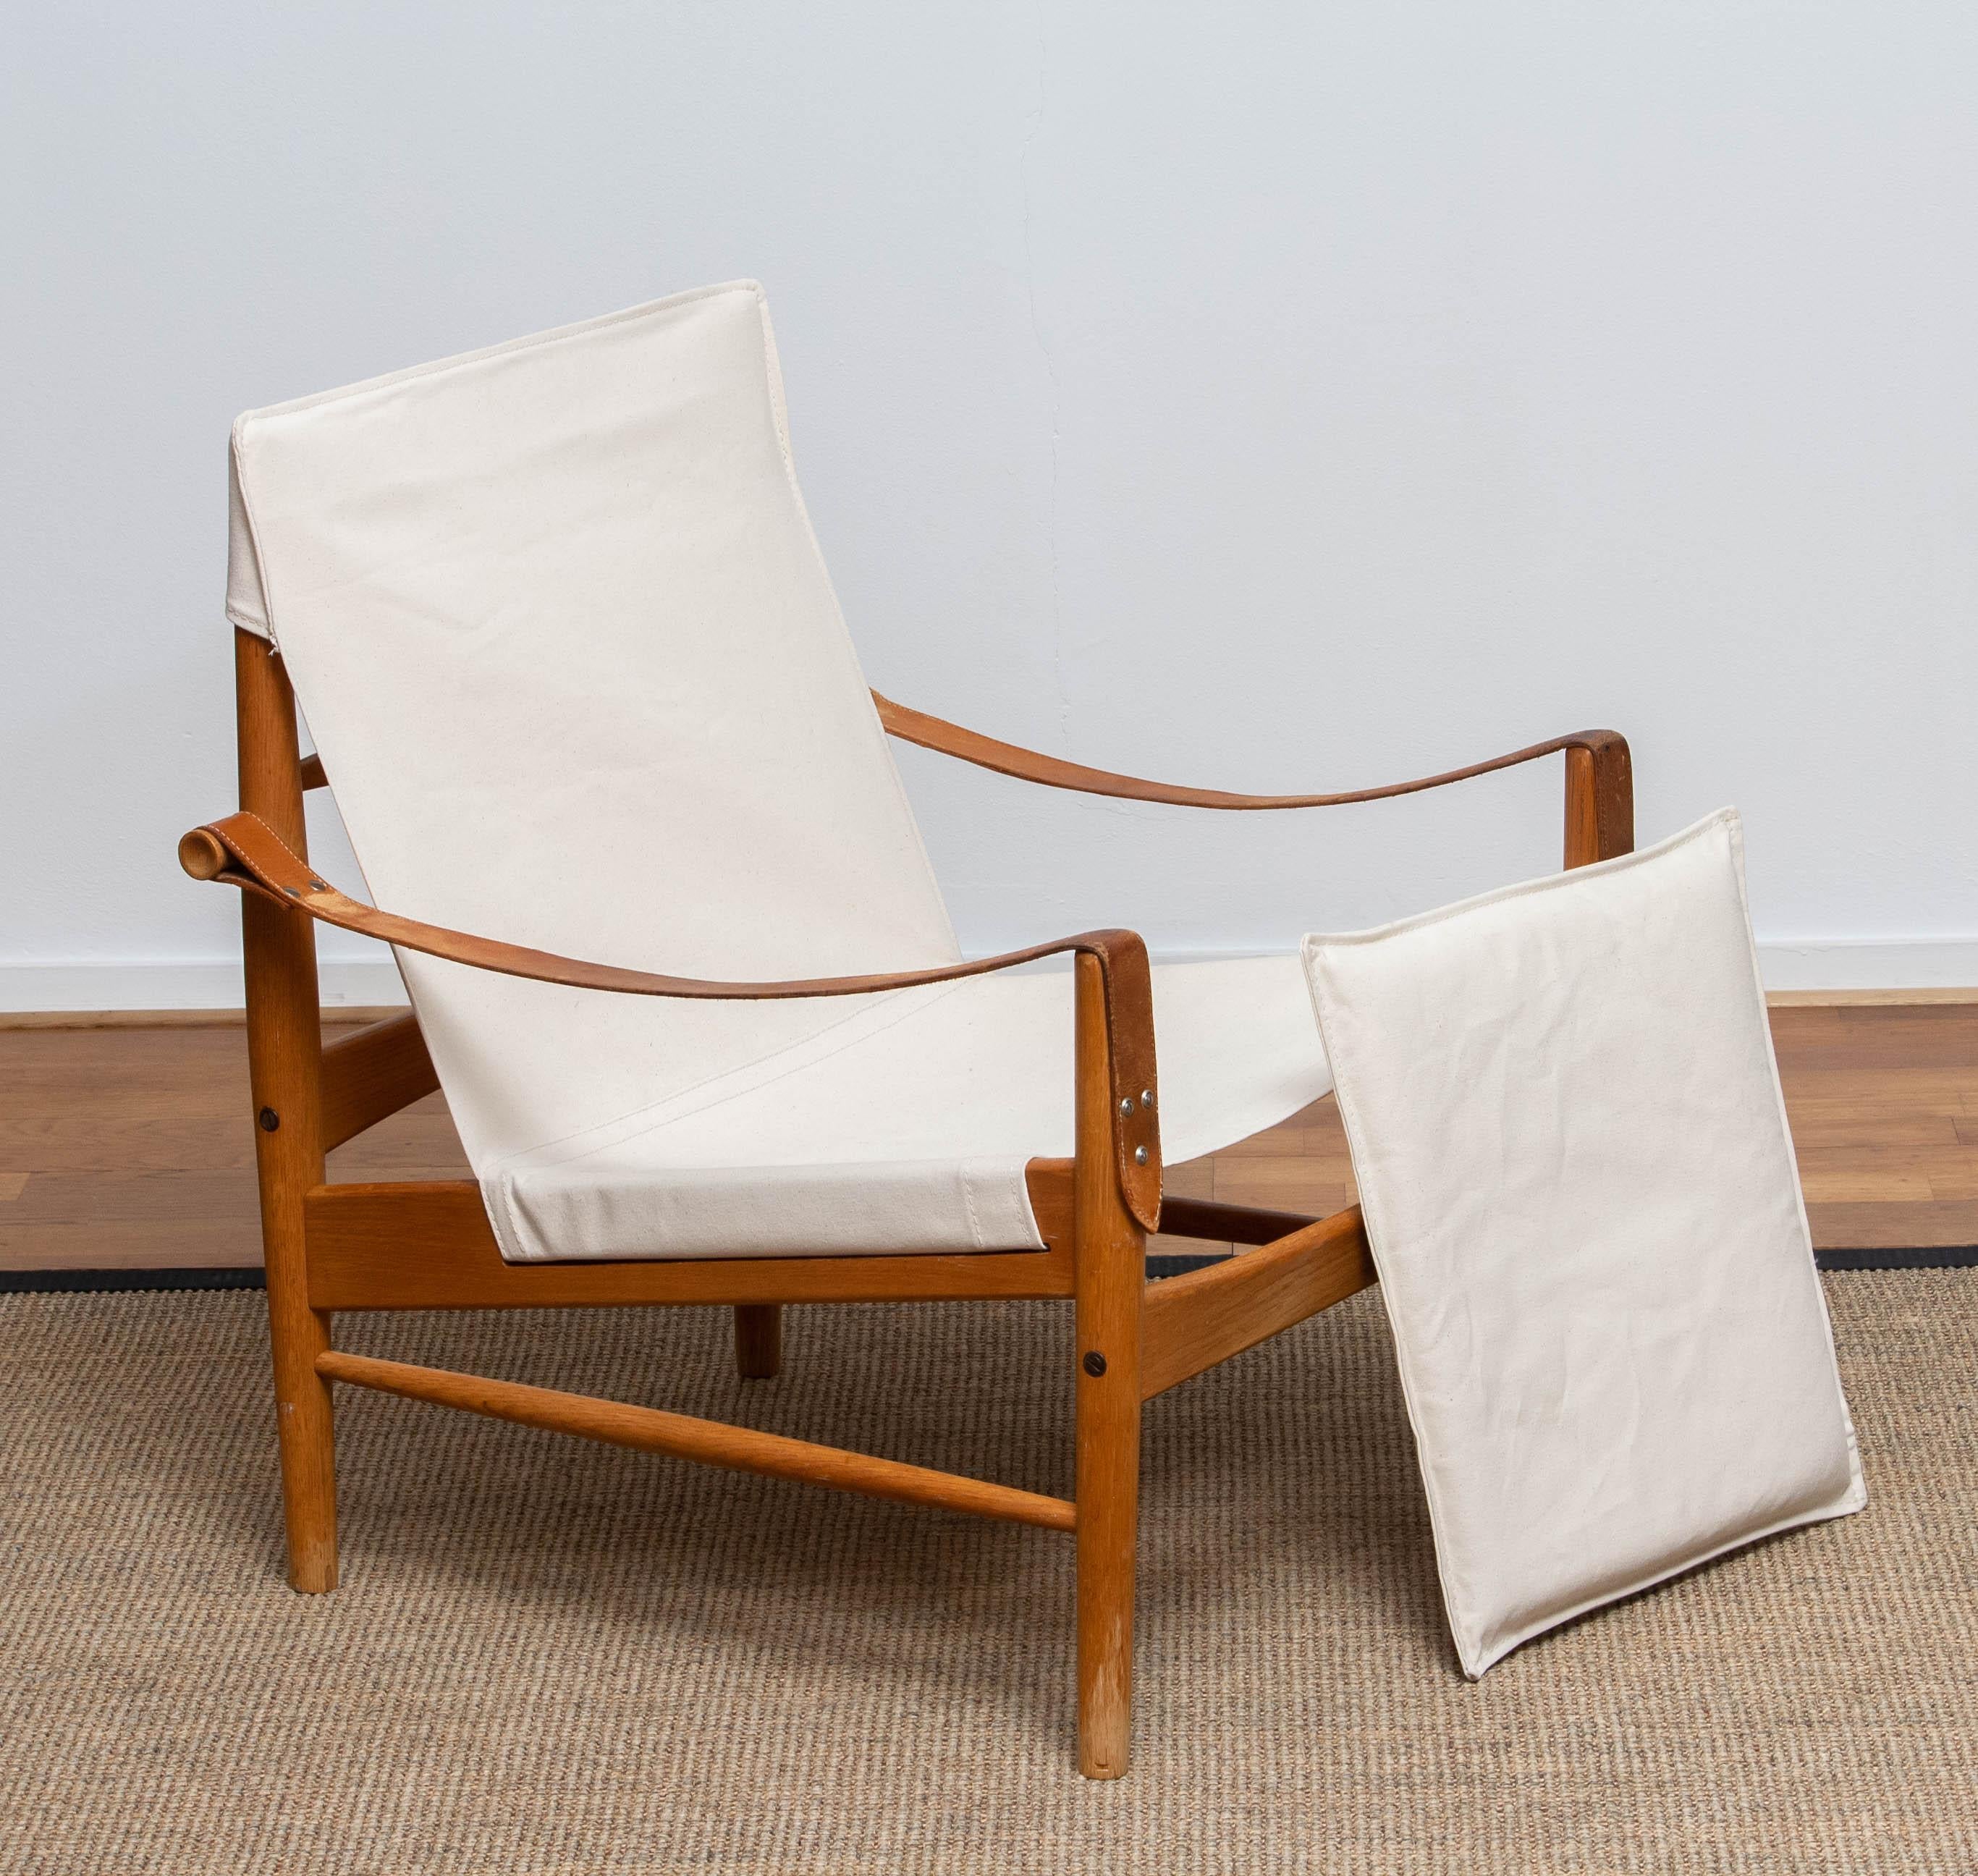 1960s, Pair of Safari Chairs by Hans Olsen for Viska Möbler in Kinna, Sweden For Sale 1